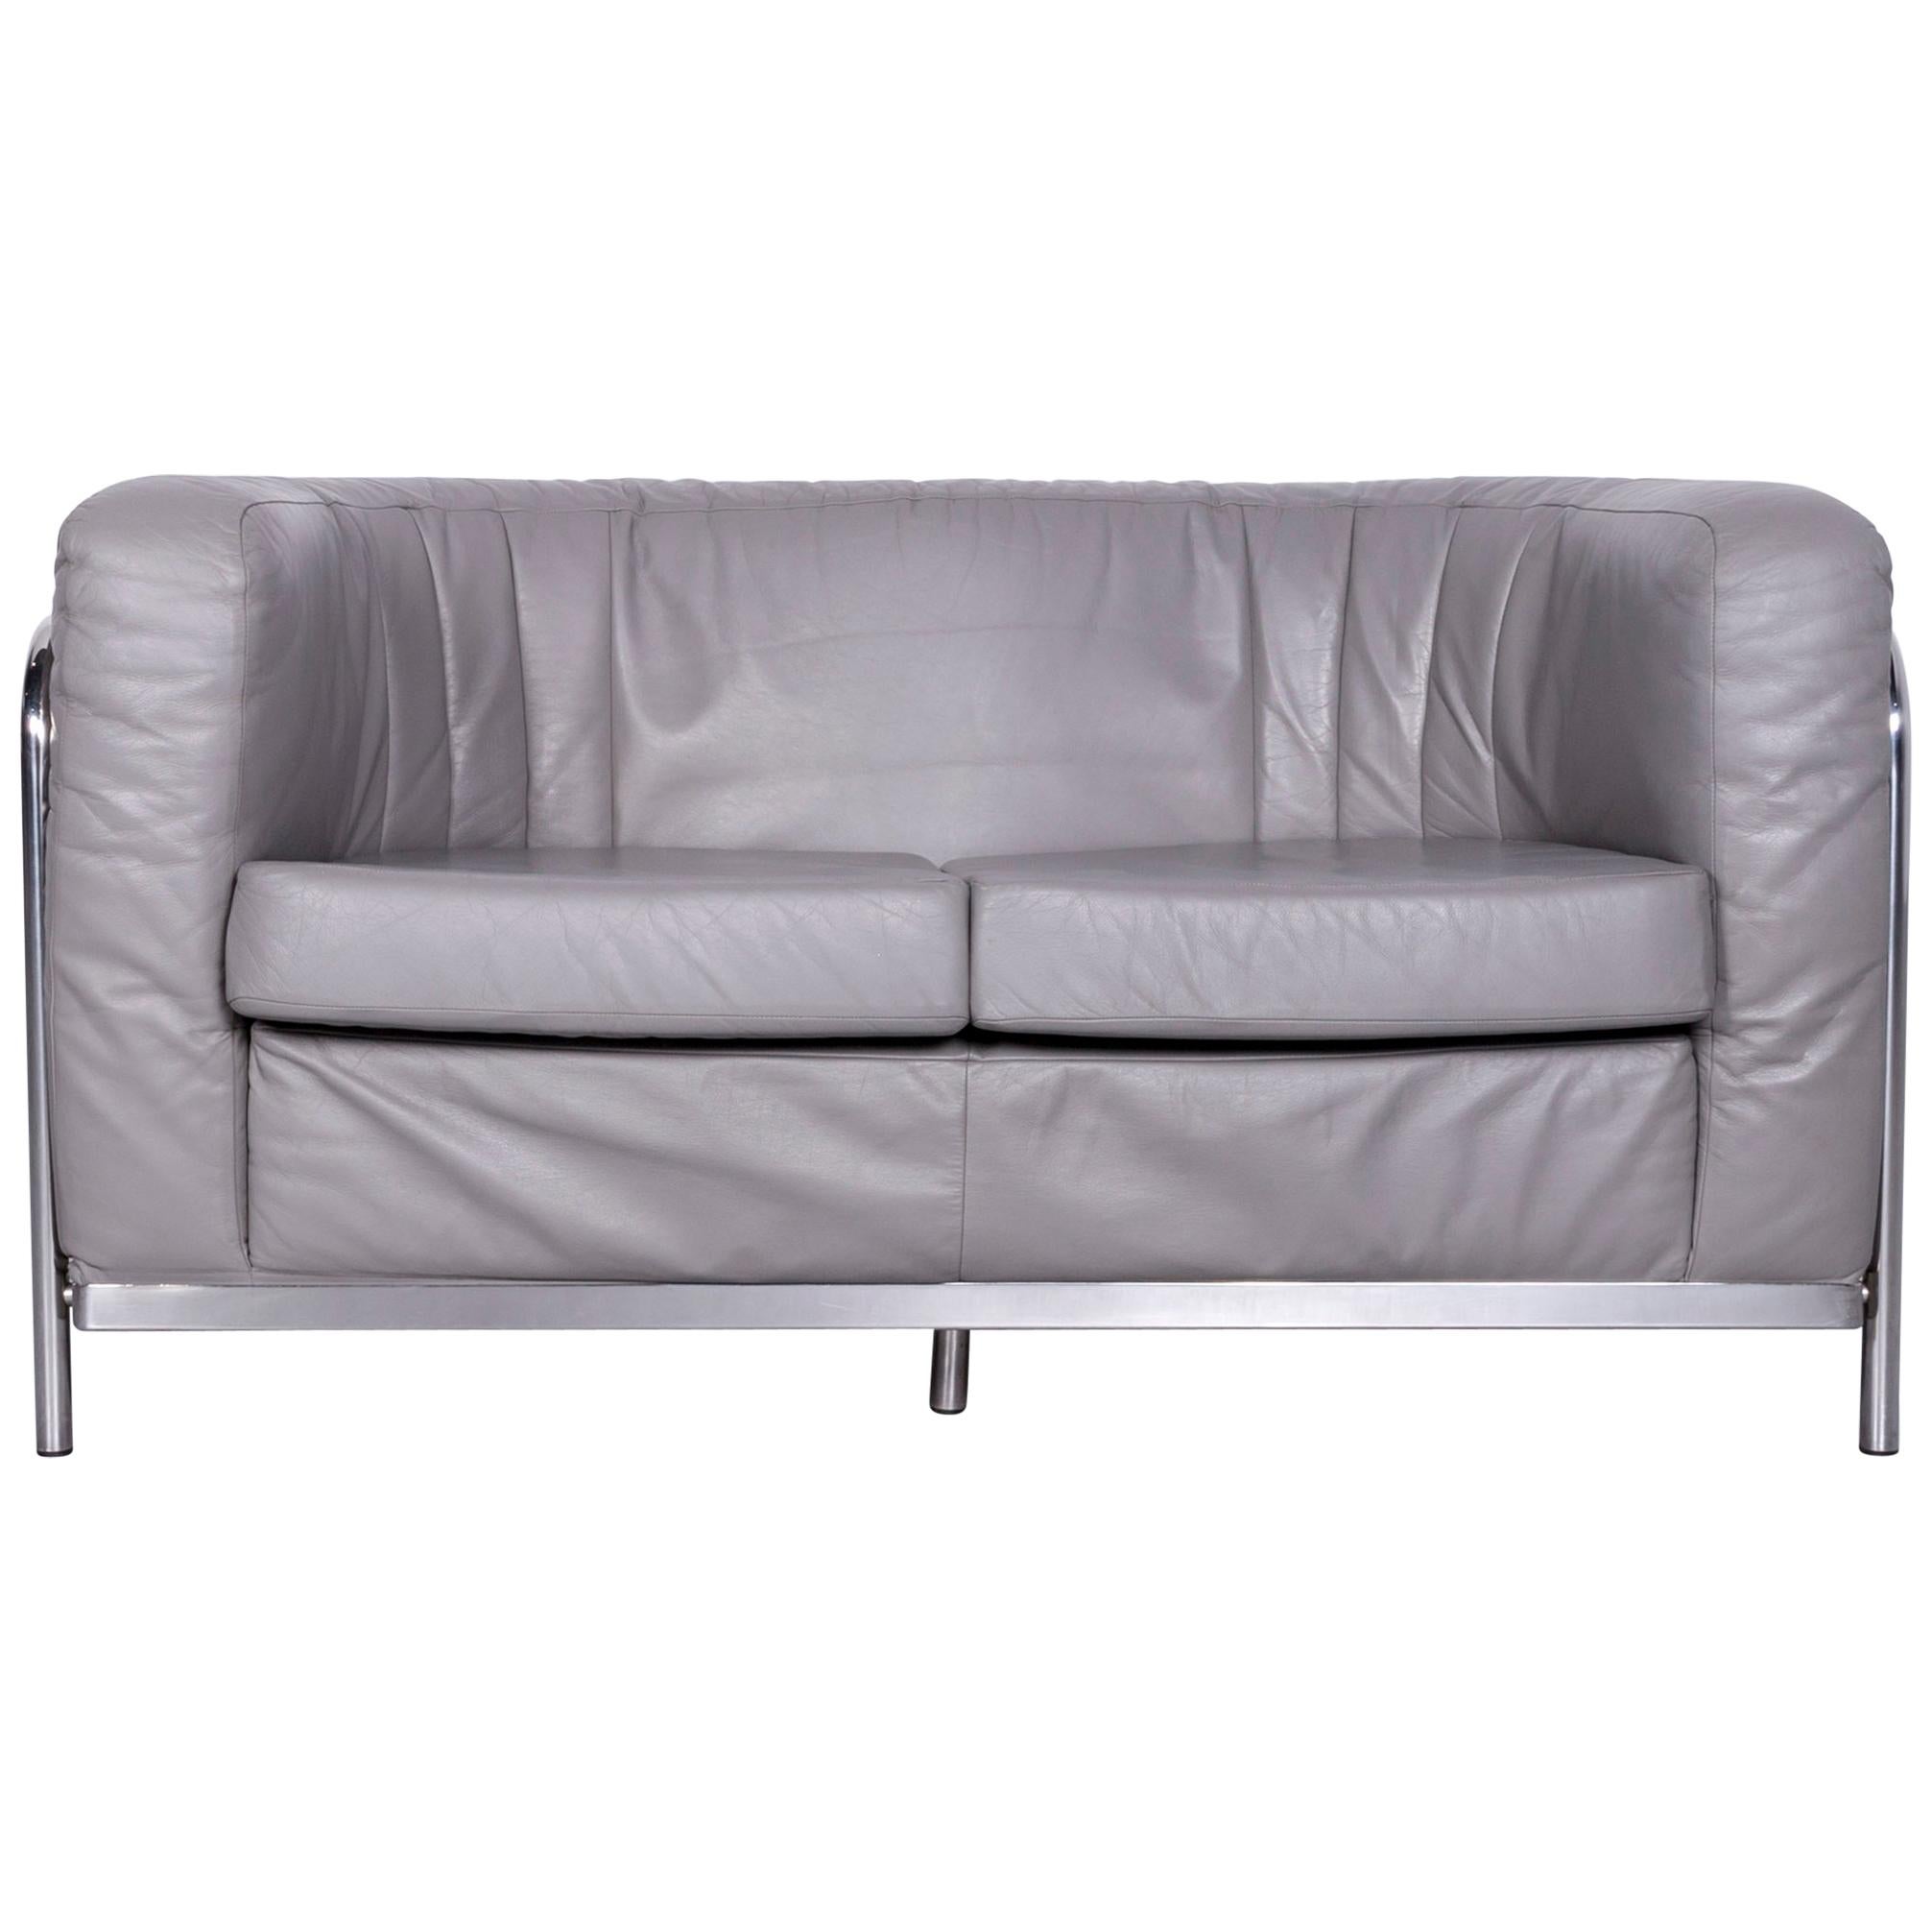 Zanotta Onda Designer Sofa Leather Grey Two-Seat Couch